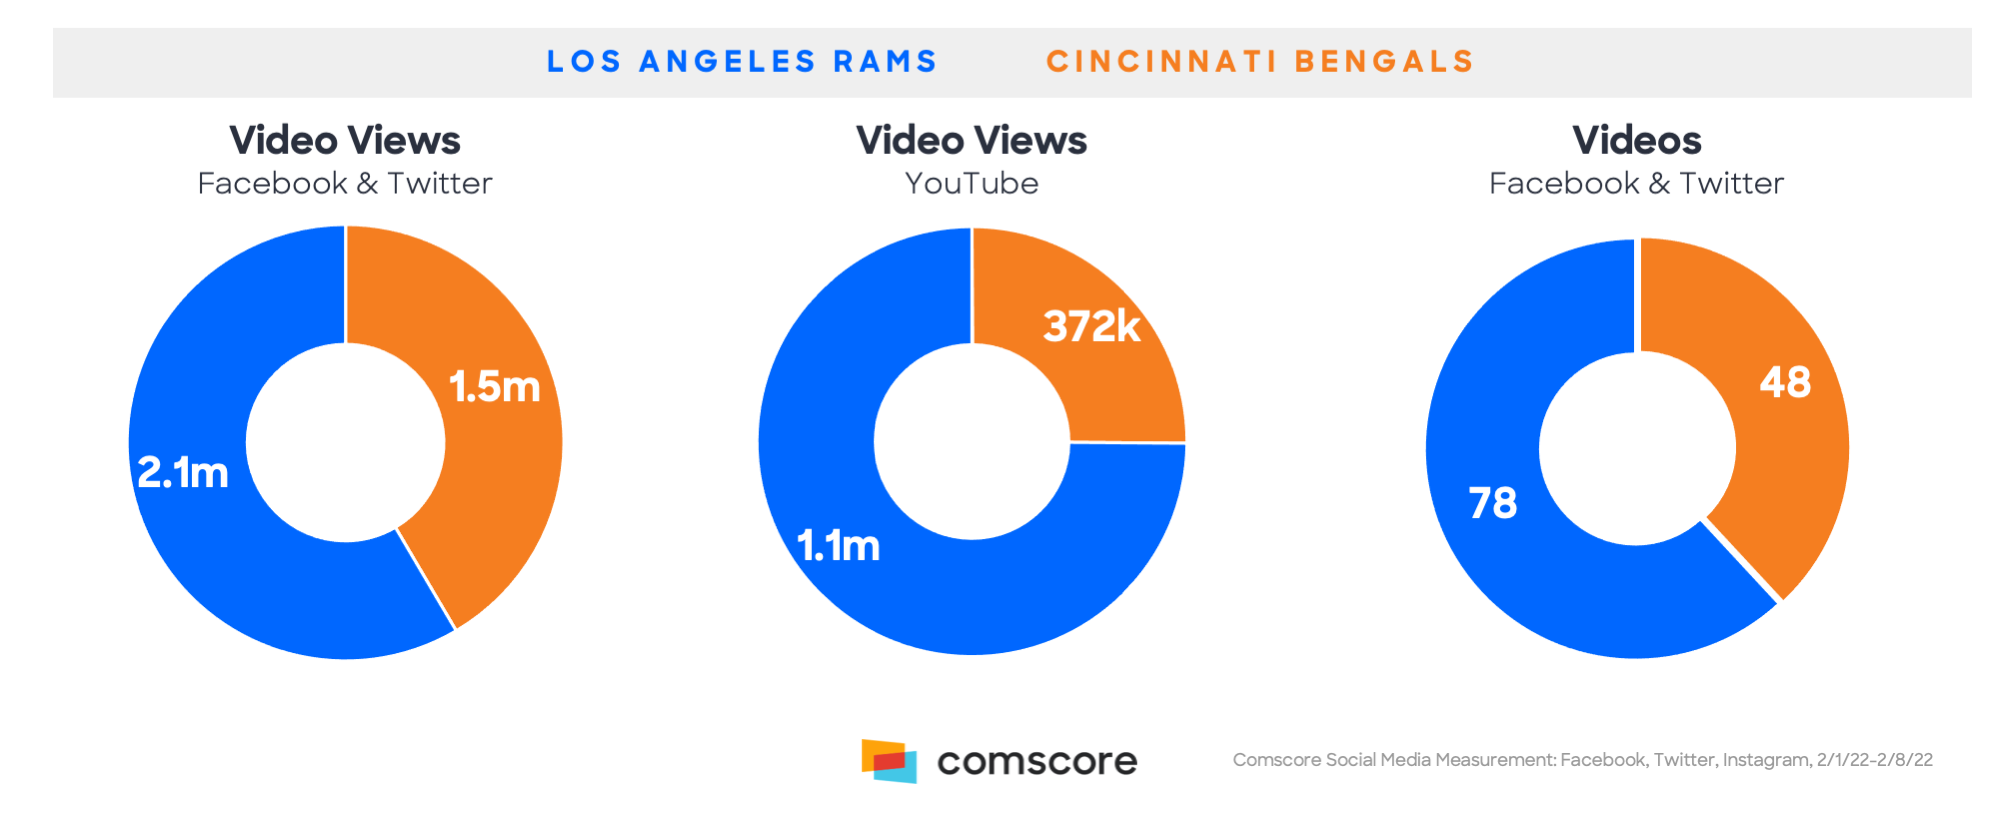 Cincinnati vs Los Angeles Video Views